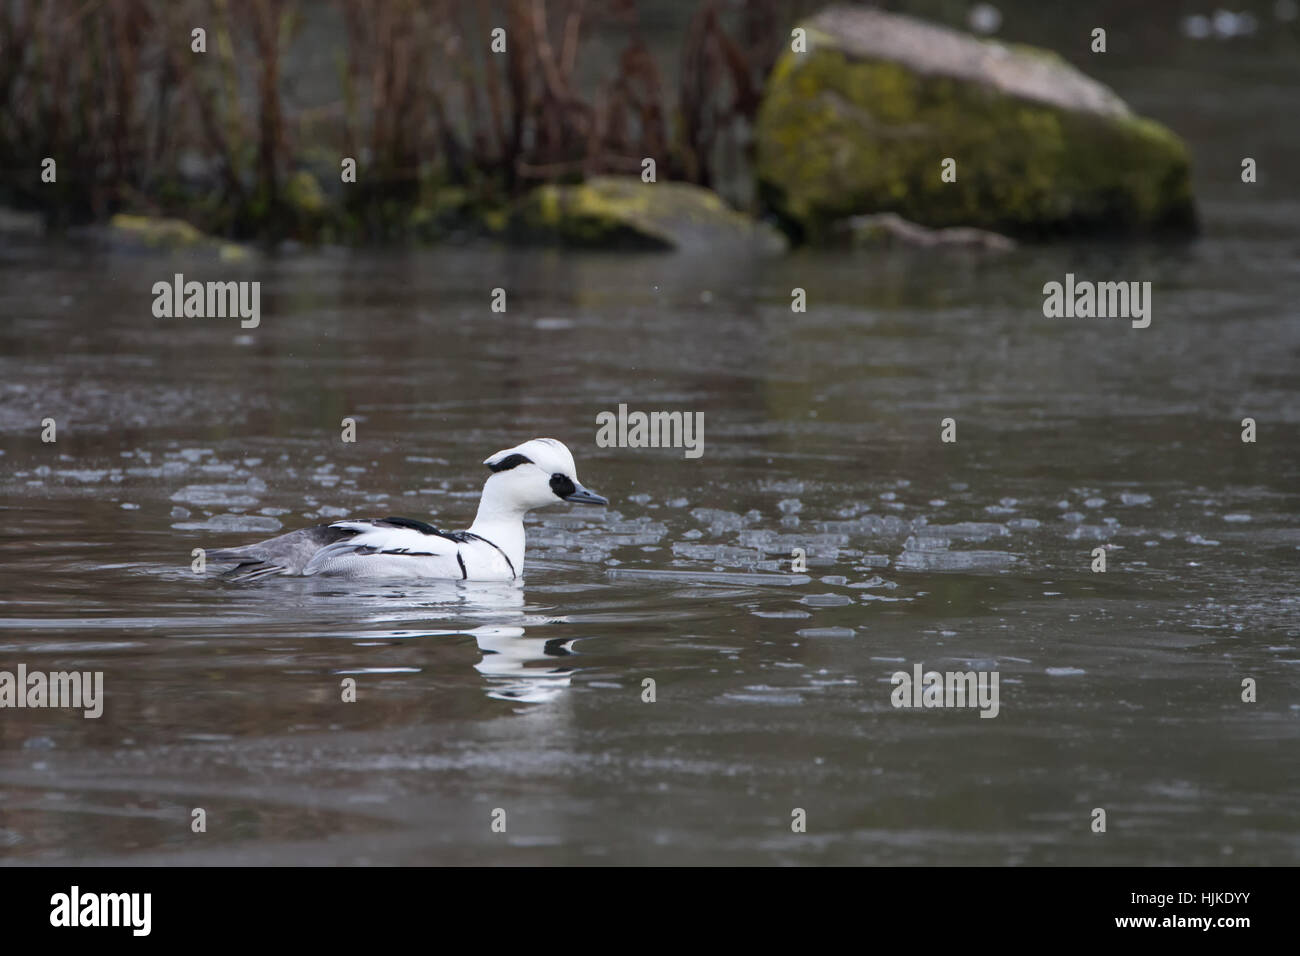 Male Smew (Mergus albellus) on a frozen pond in Winter Stock Photo